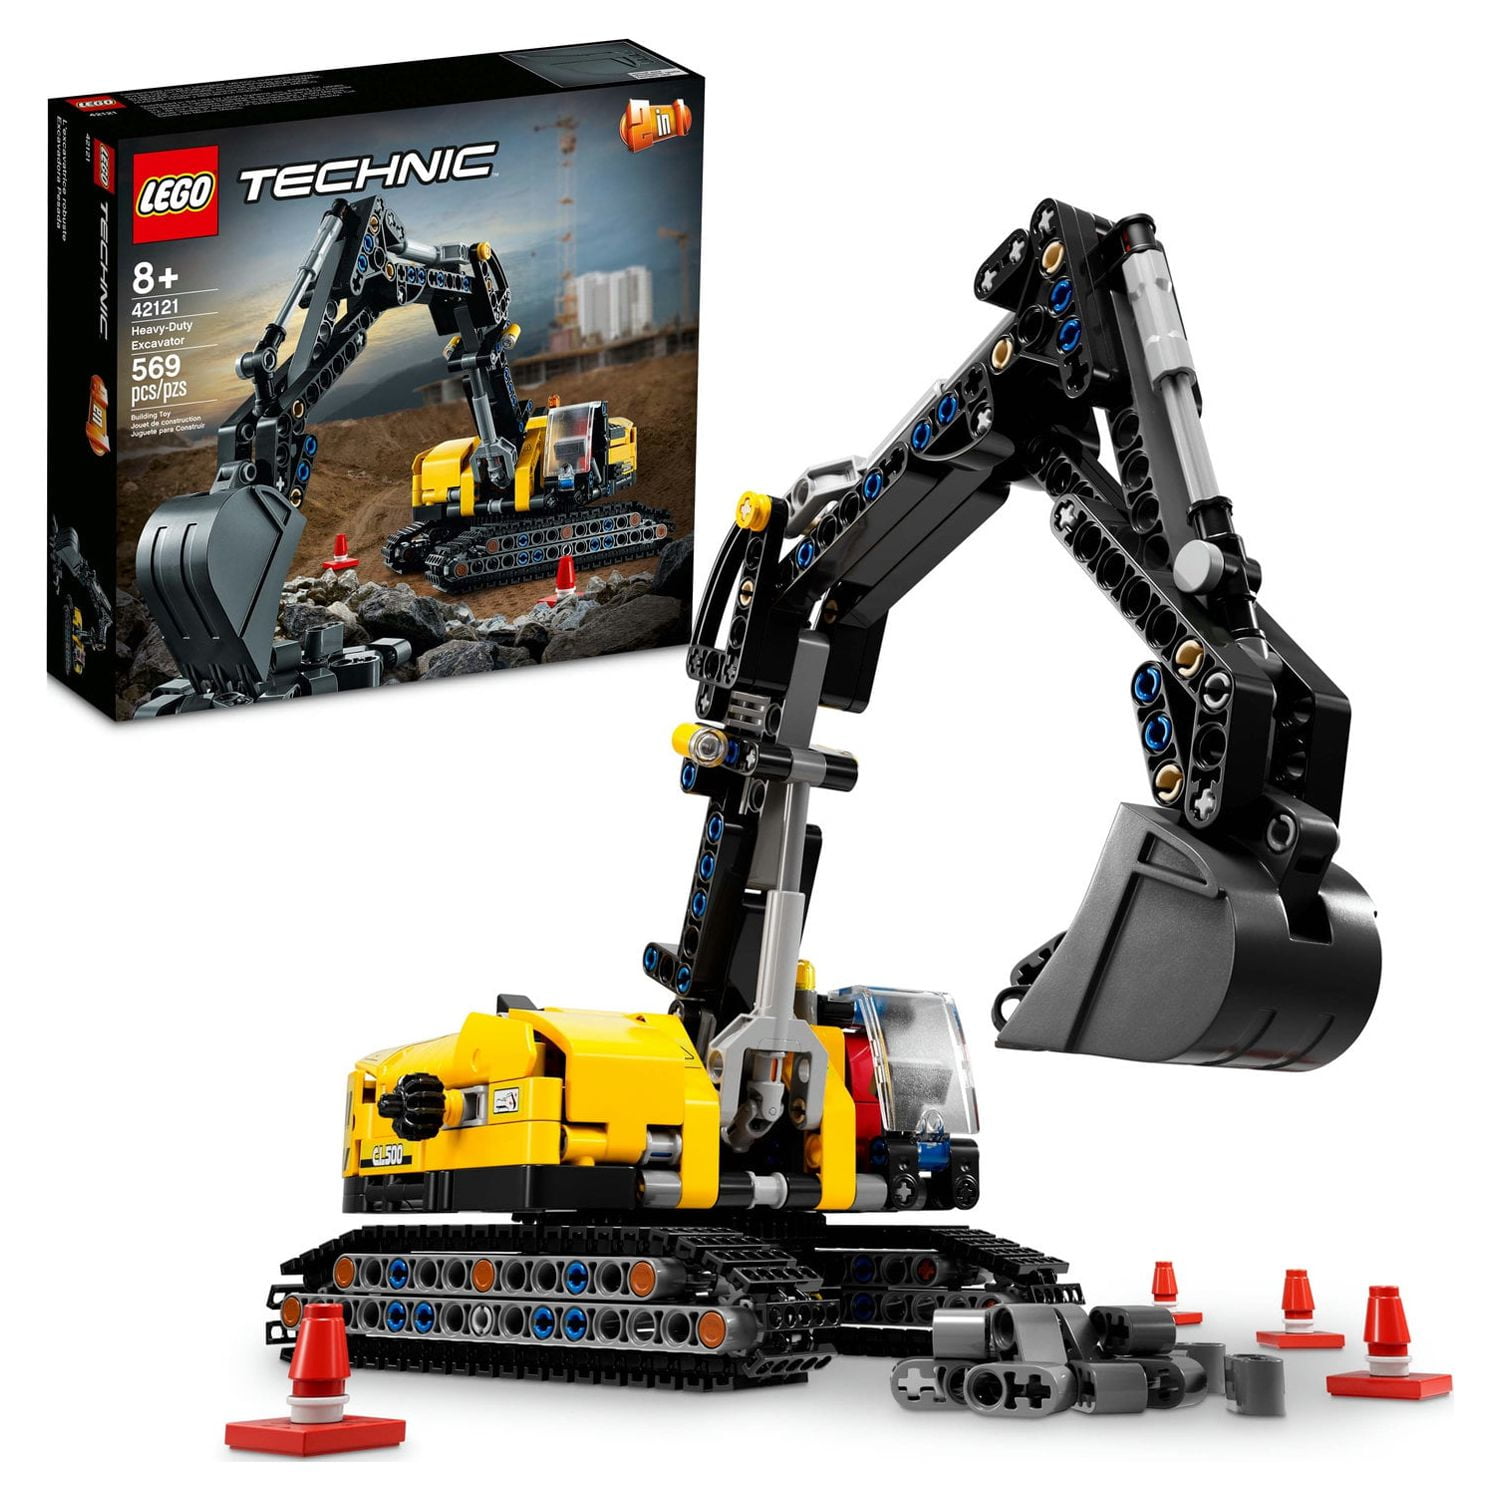 LEGO Technic Heavy-Duty Excavator 42121 2-in 1 Model Building Toy